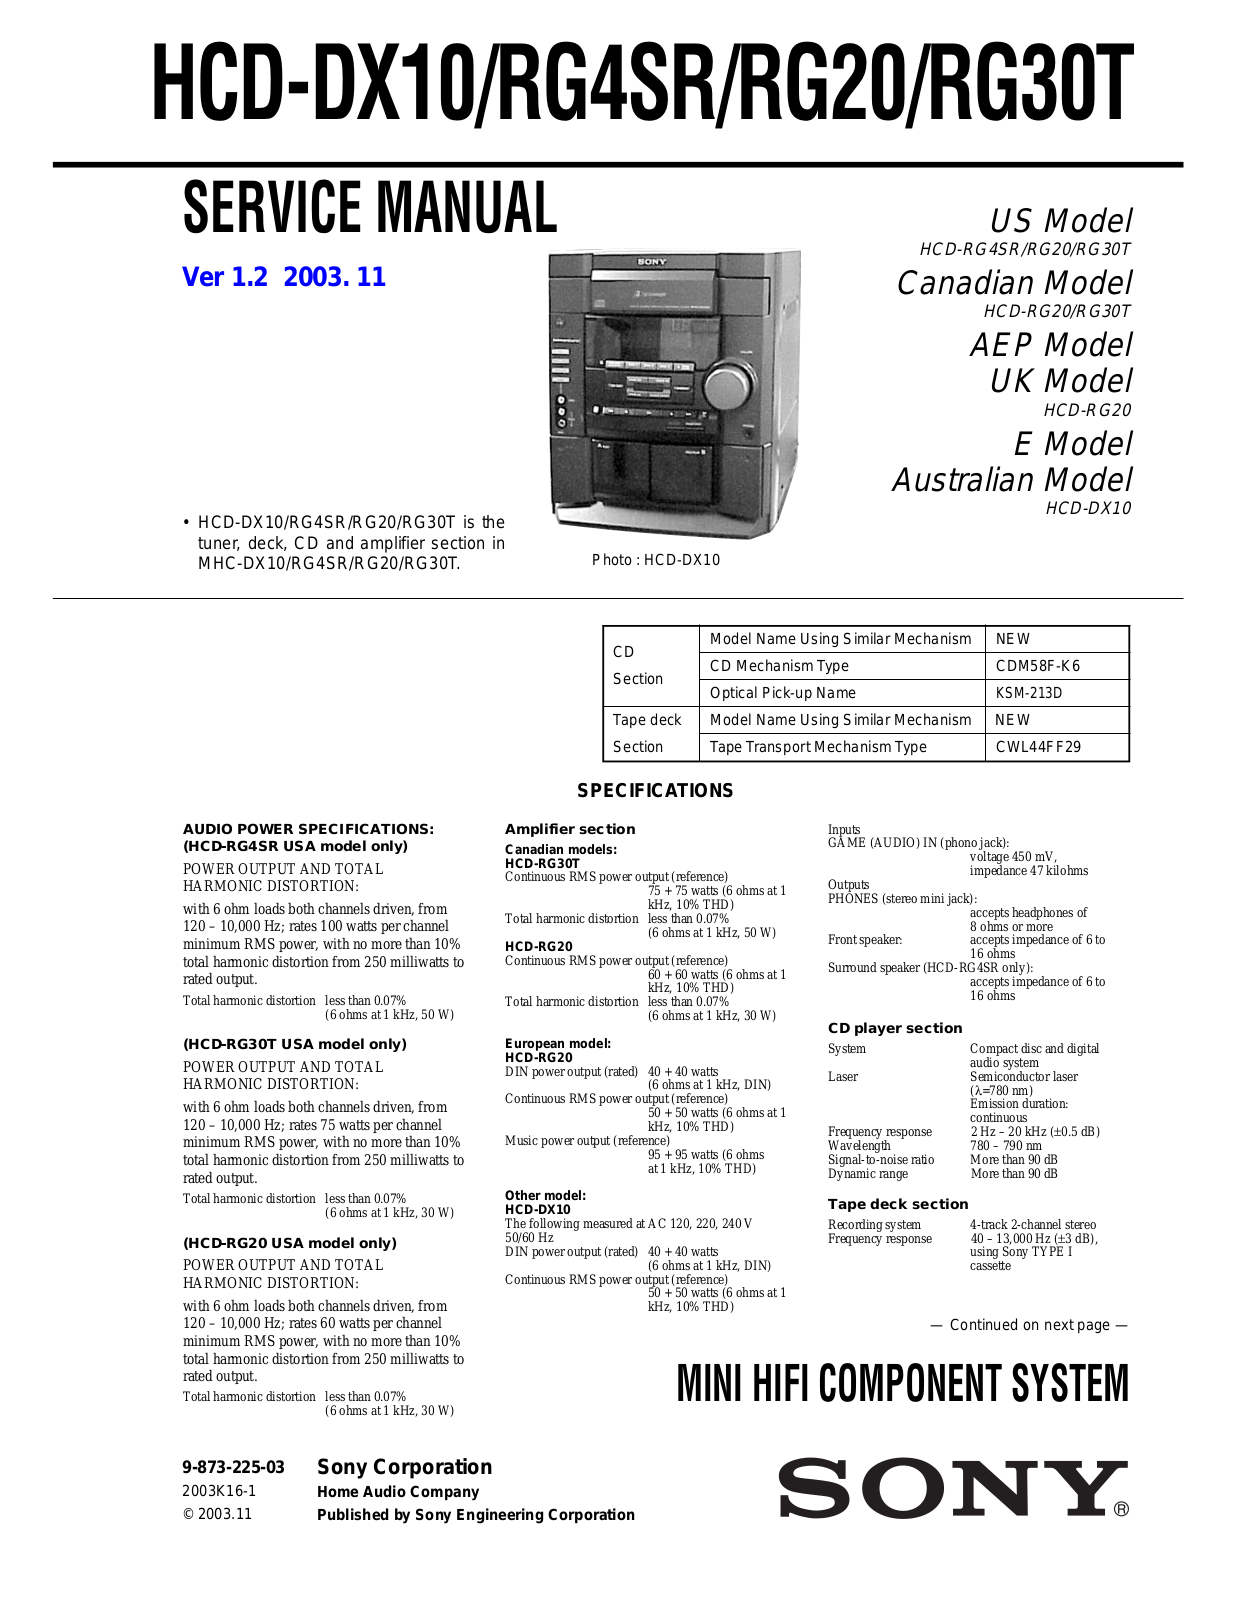 Sony HCD-DX10 Service Manual